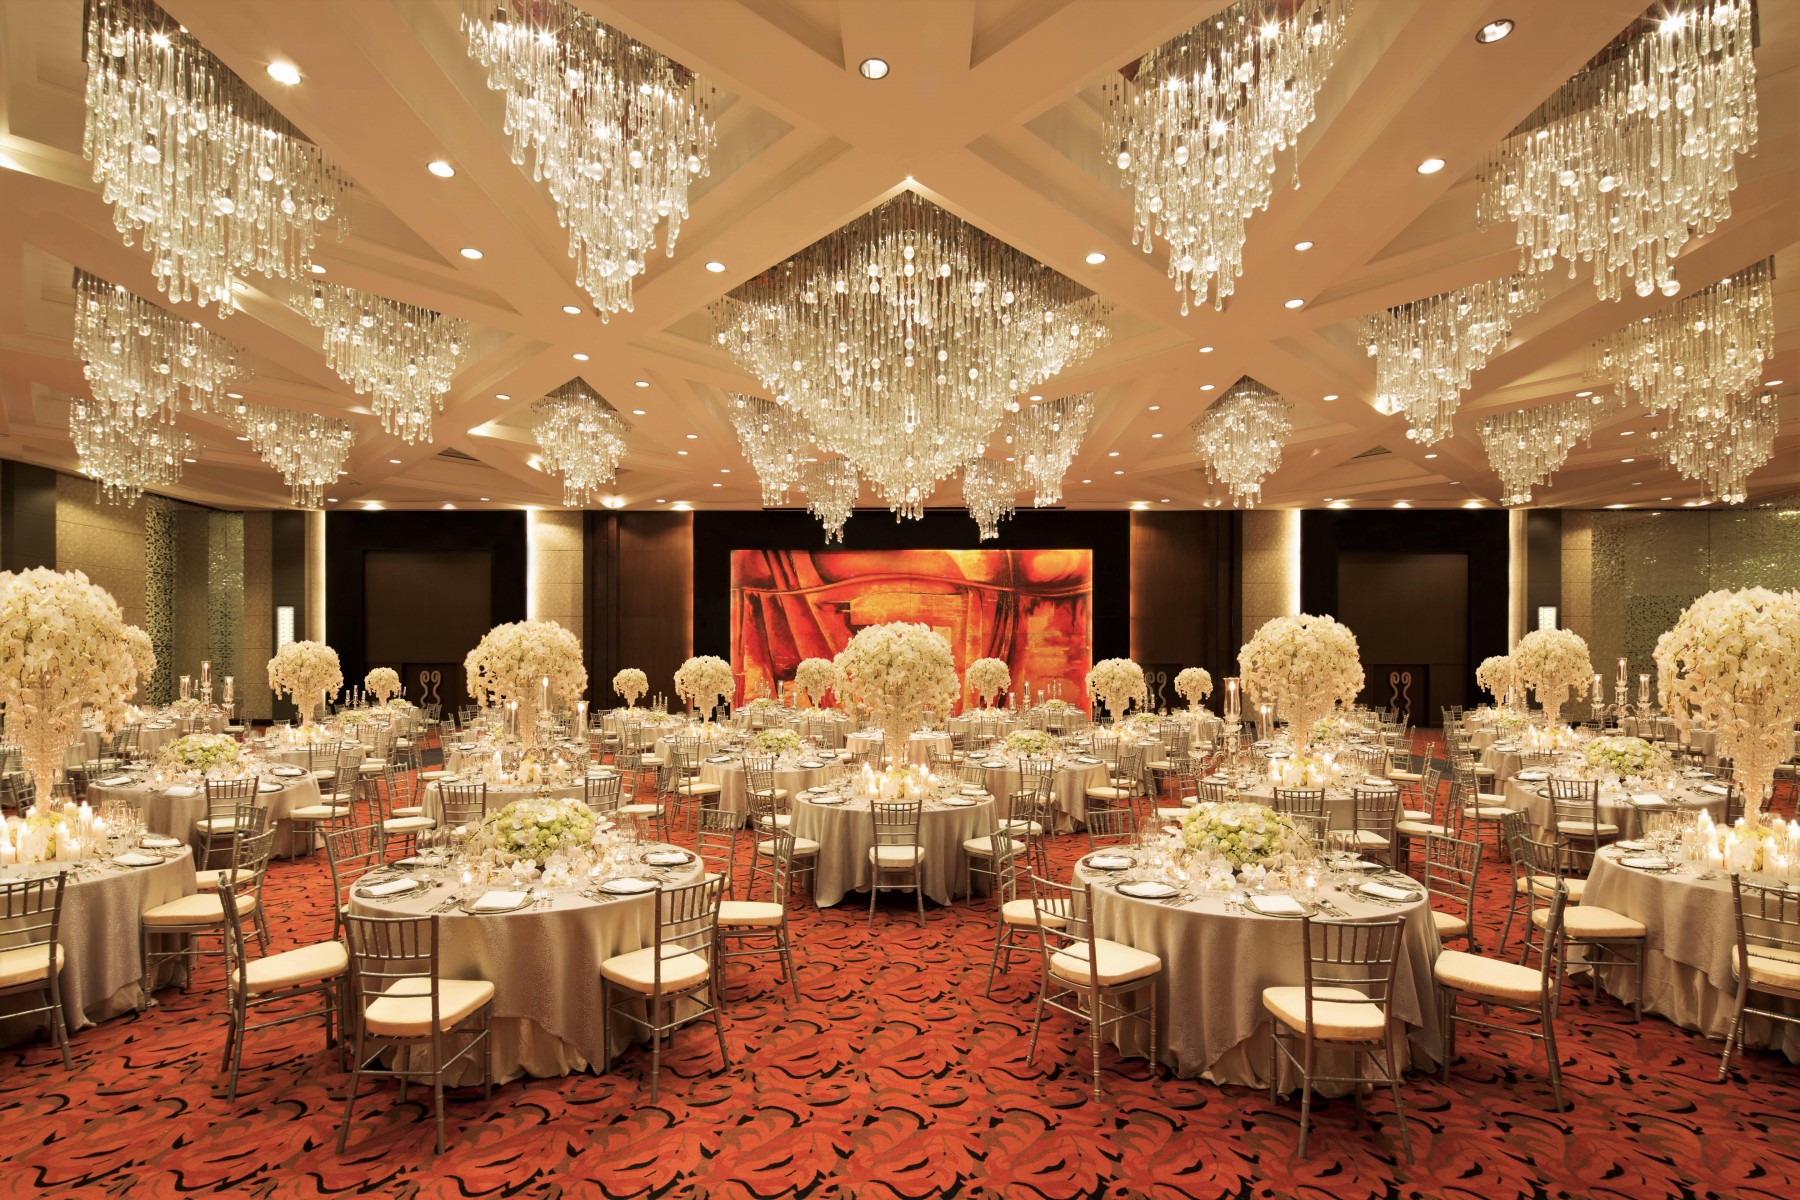 sofitel manila grand ballroom - sofitel hotel